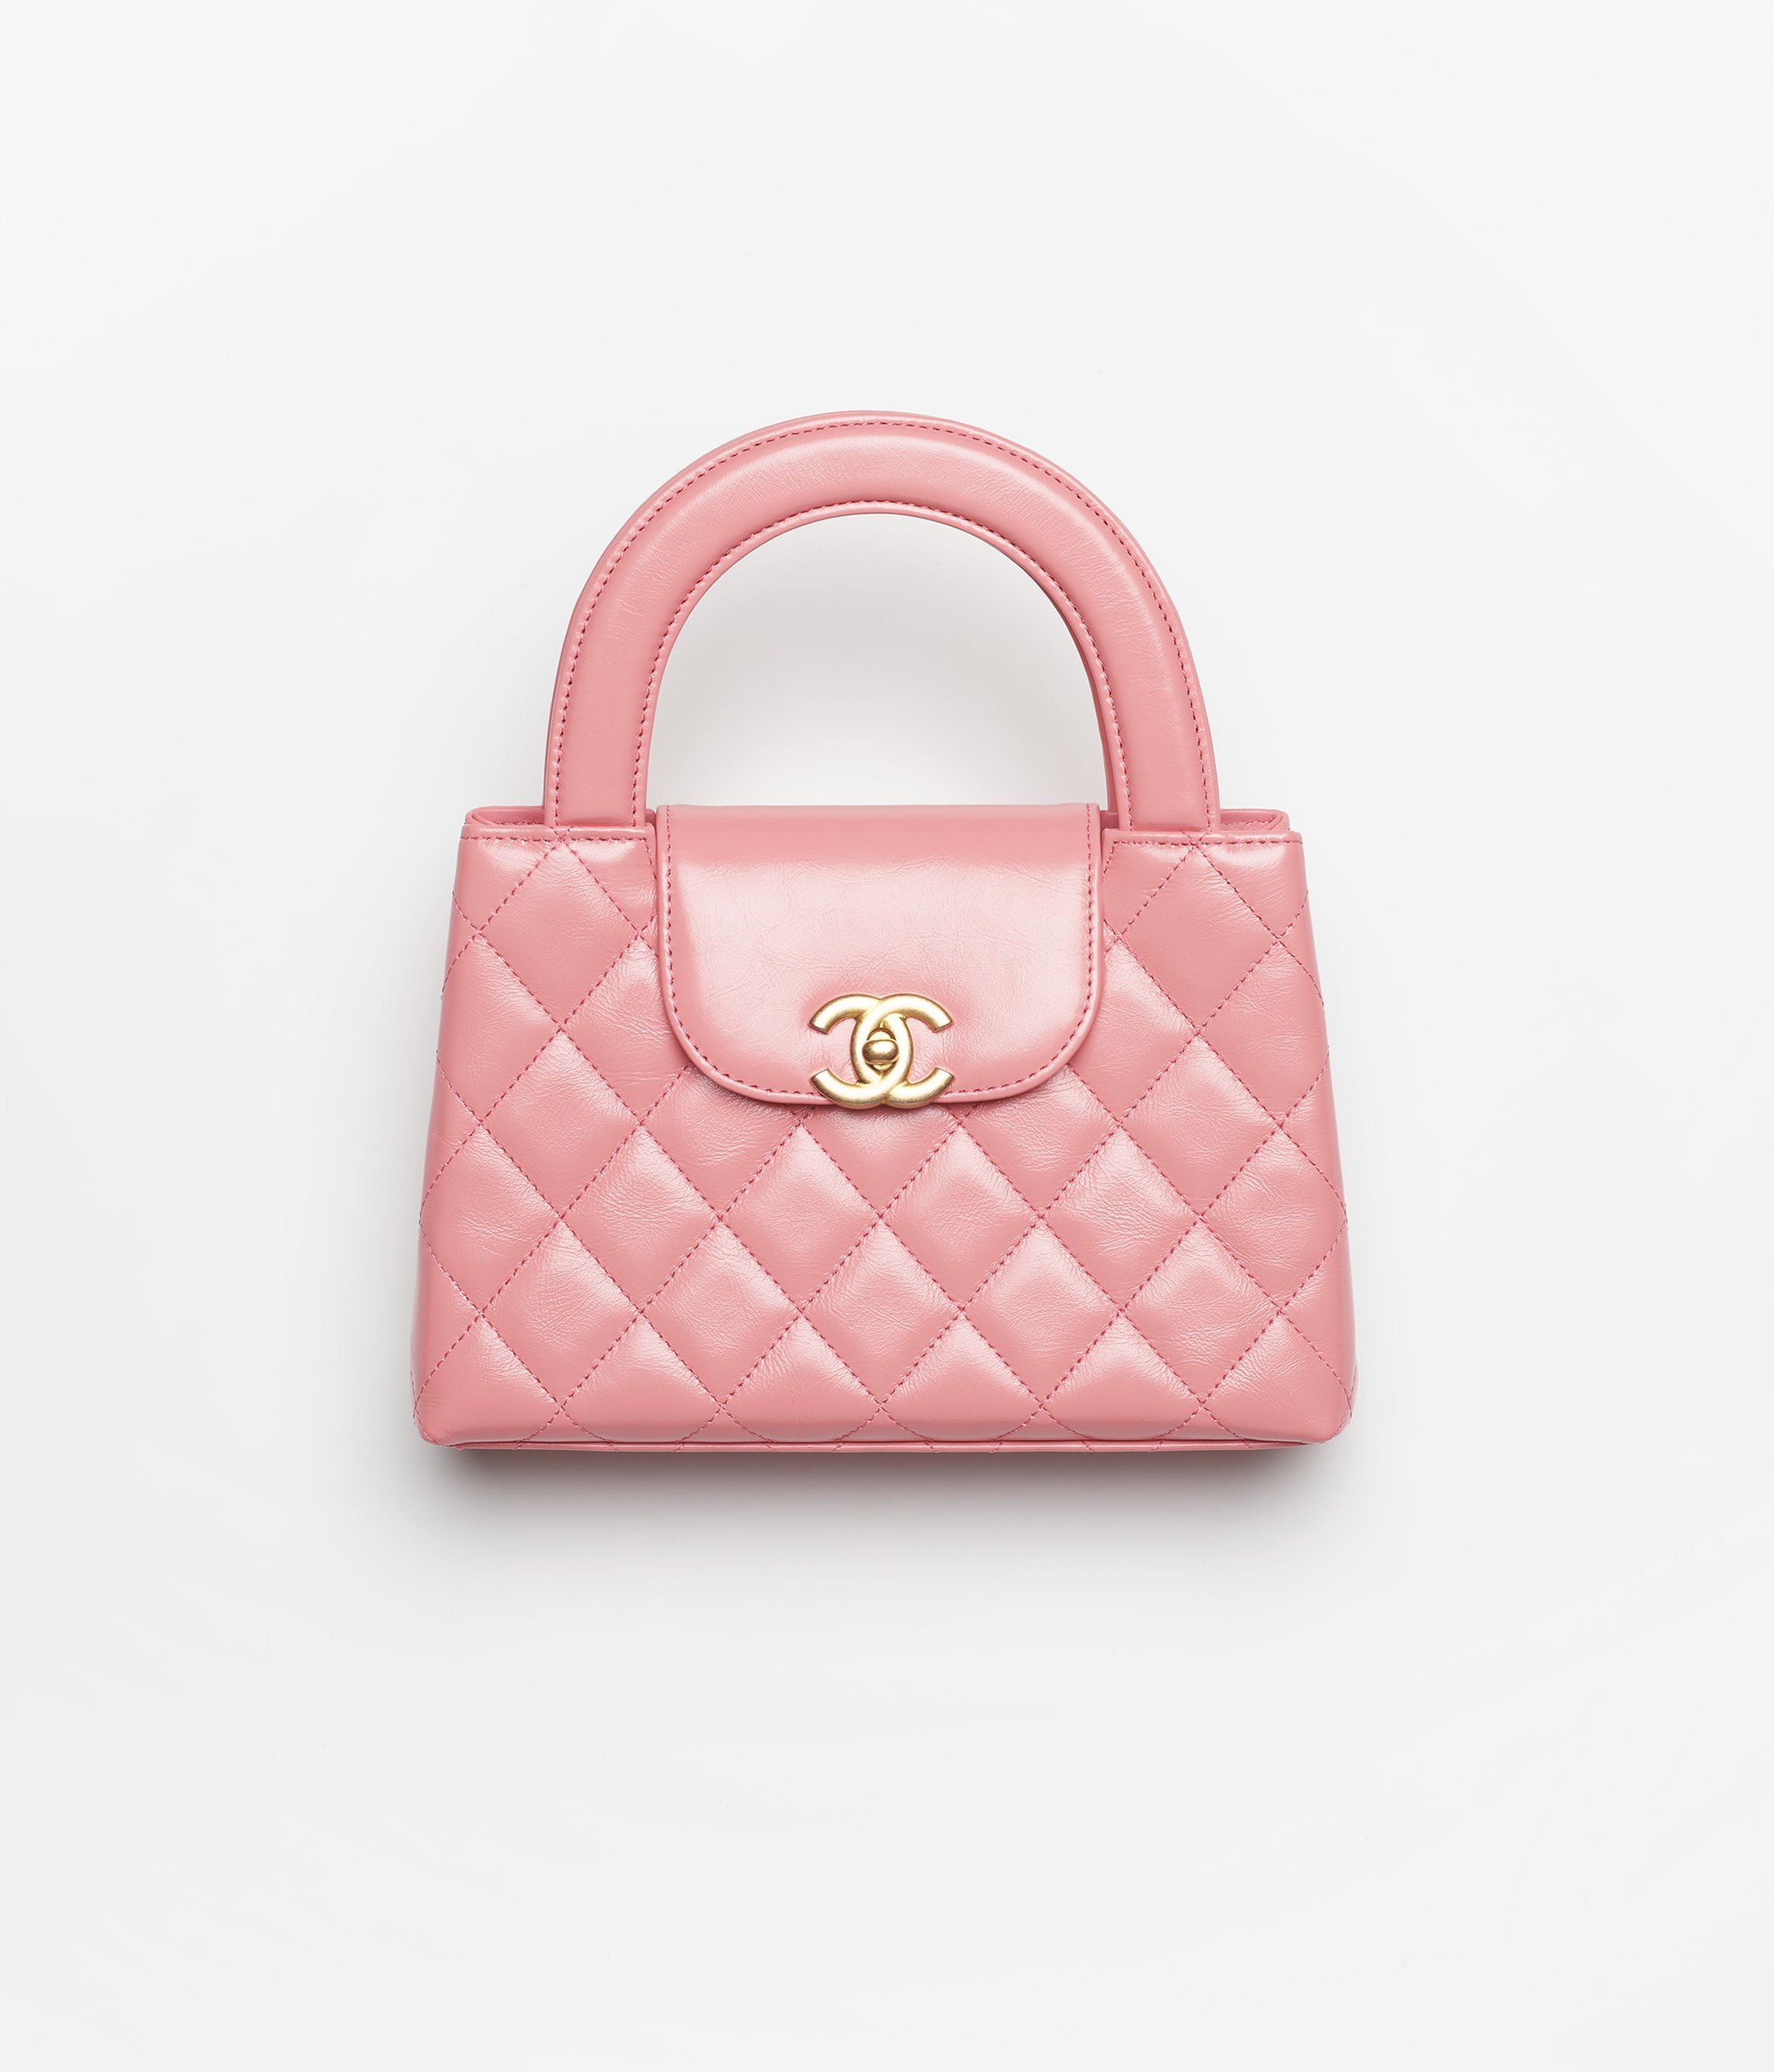 Chanel Mini Shopping Bag.jpeg